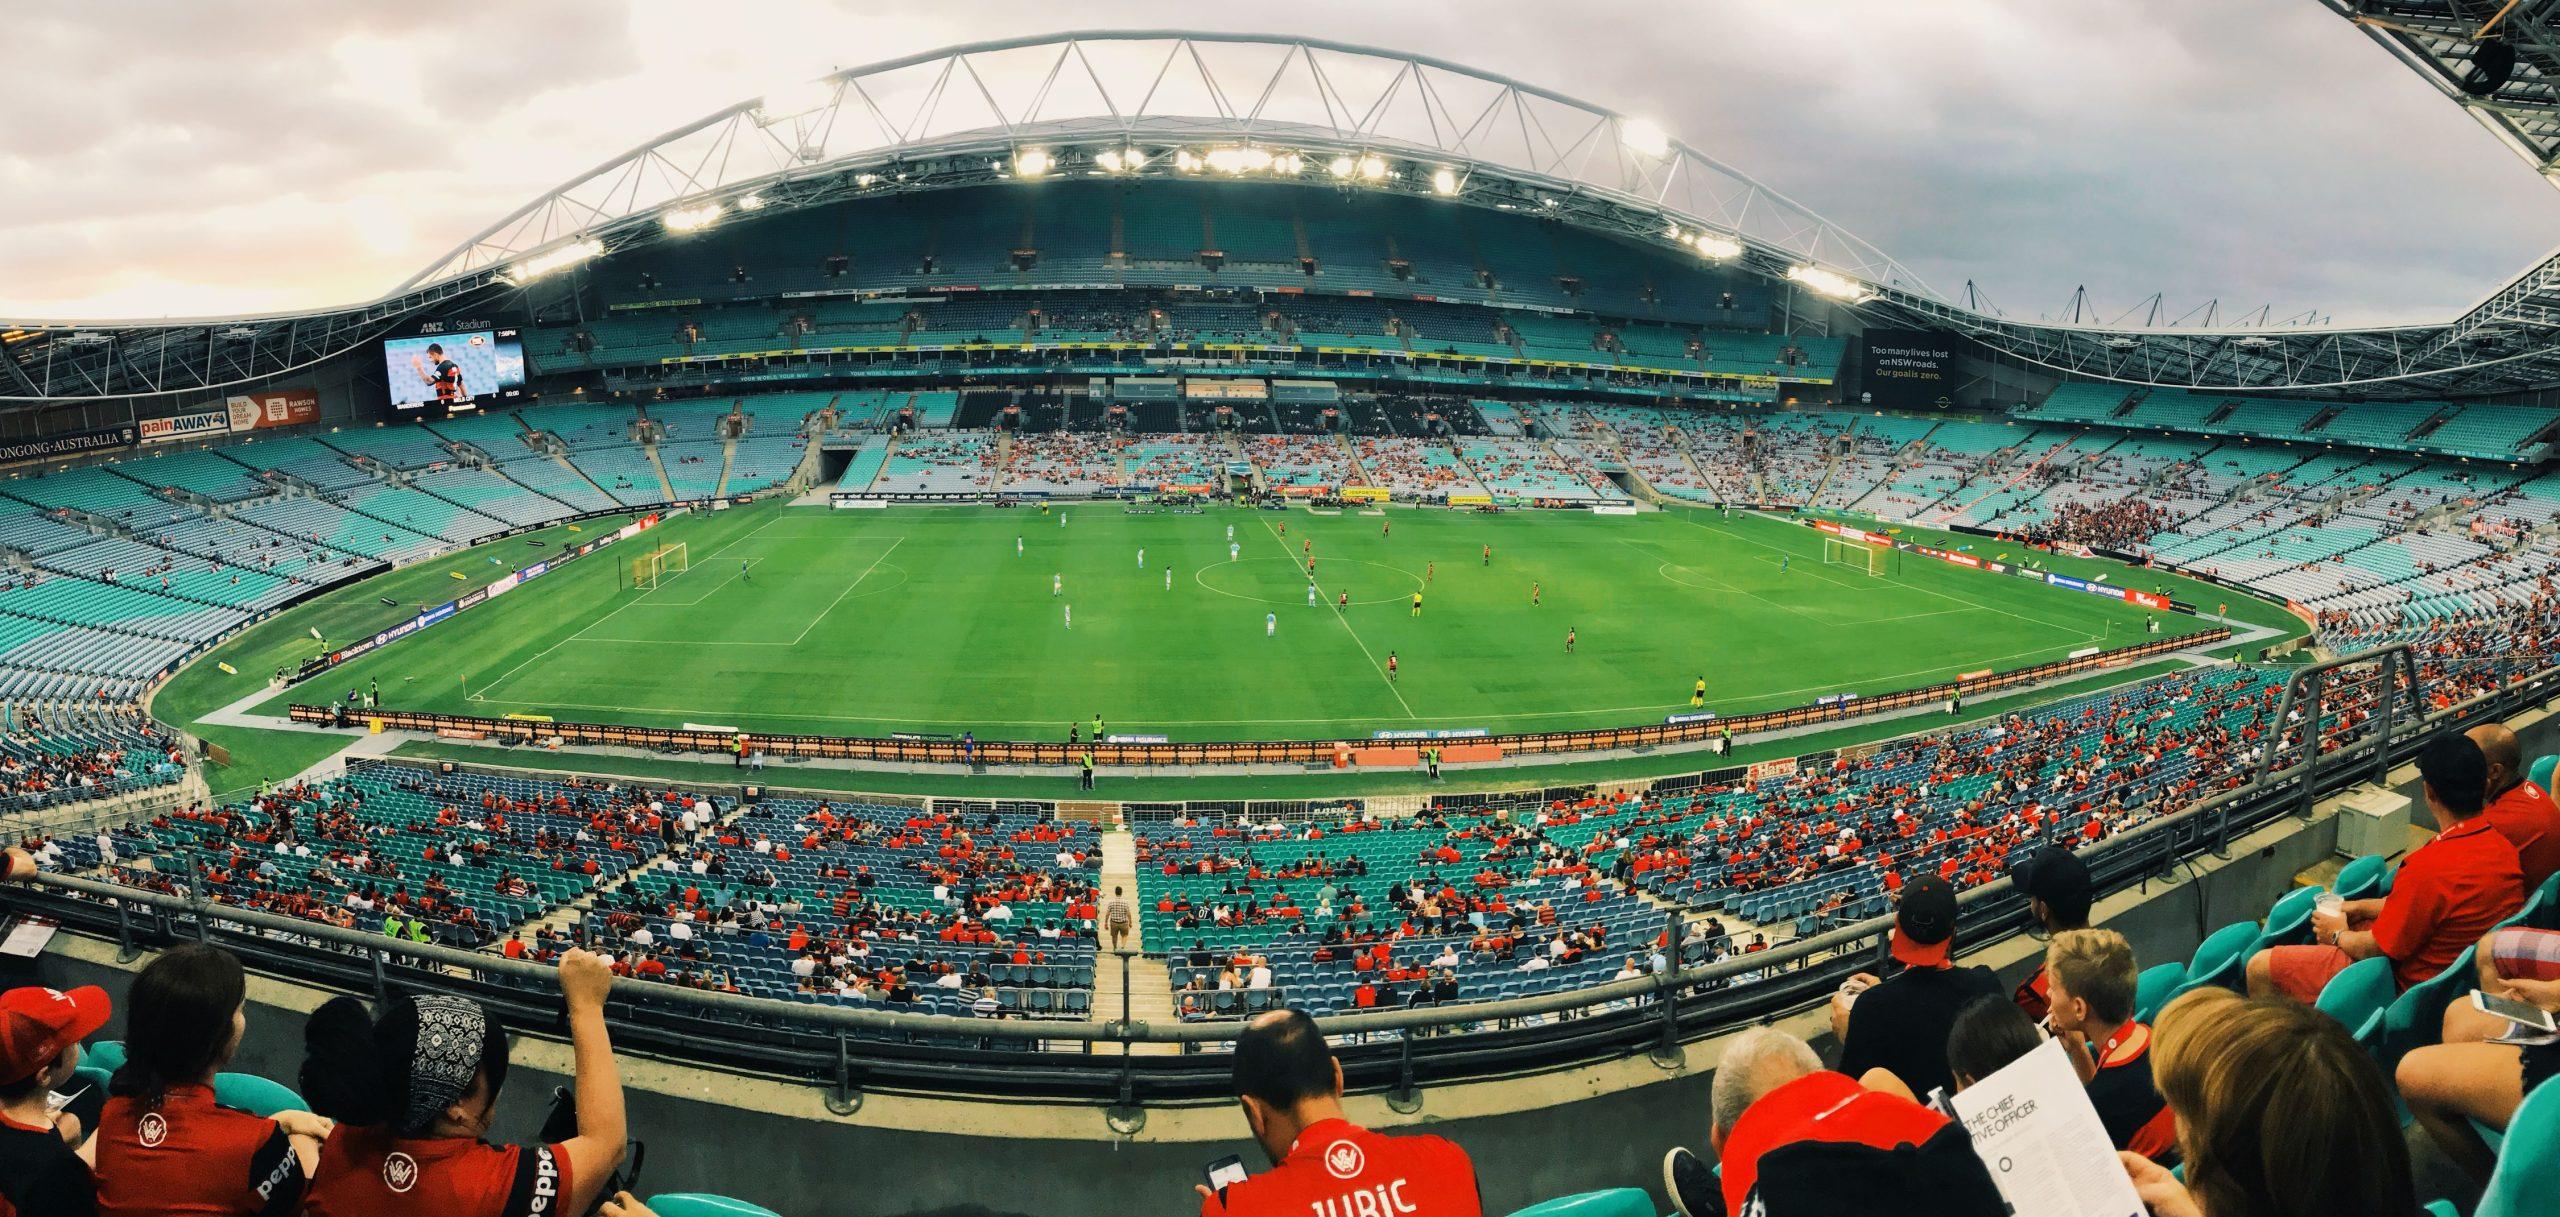 Stadium Australia hosting an unidentified football (soccer match).